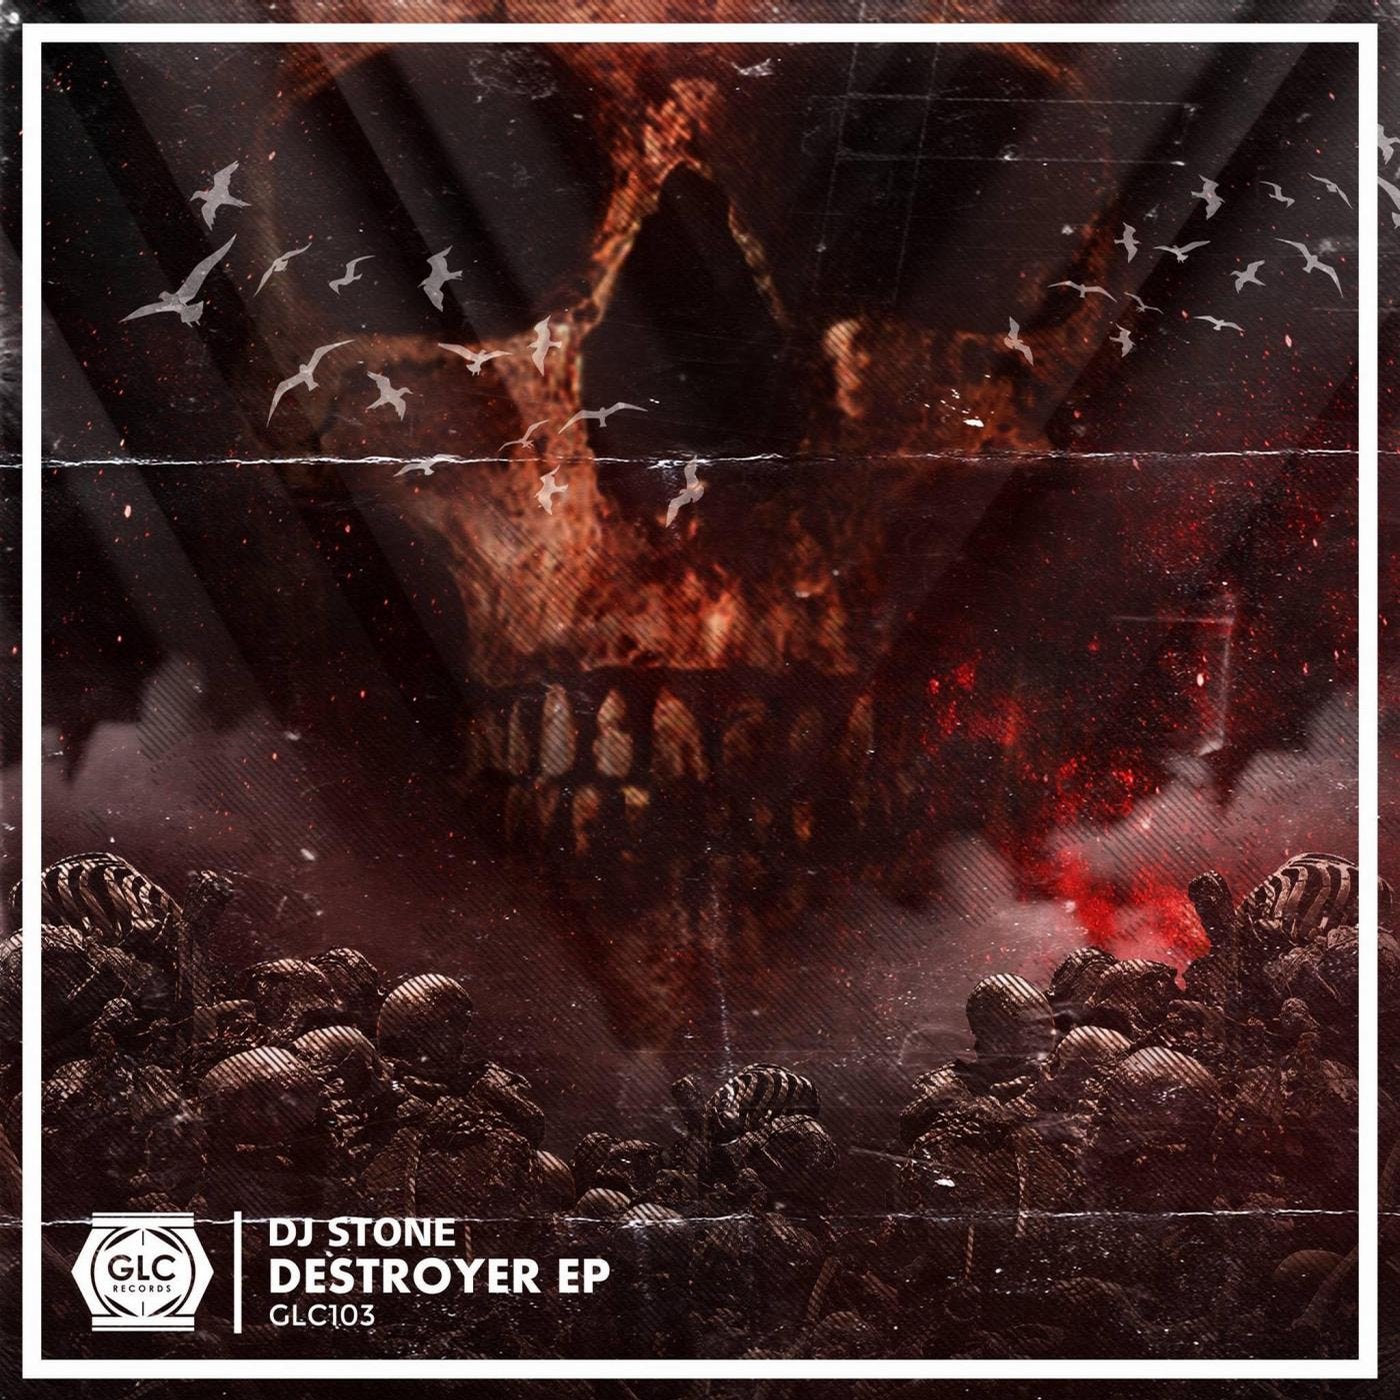 DESTROYER EP